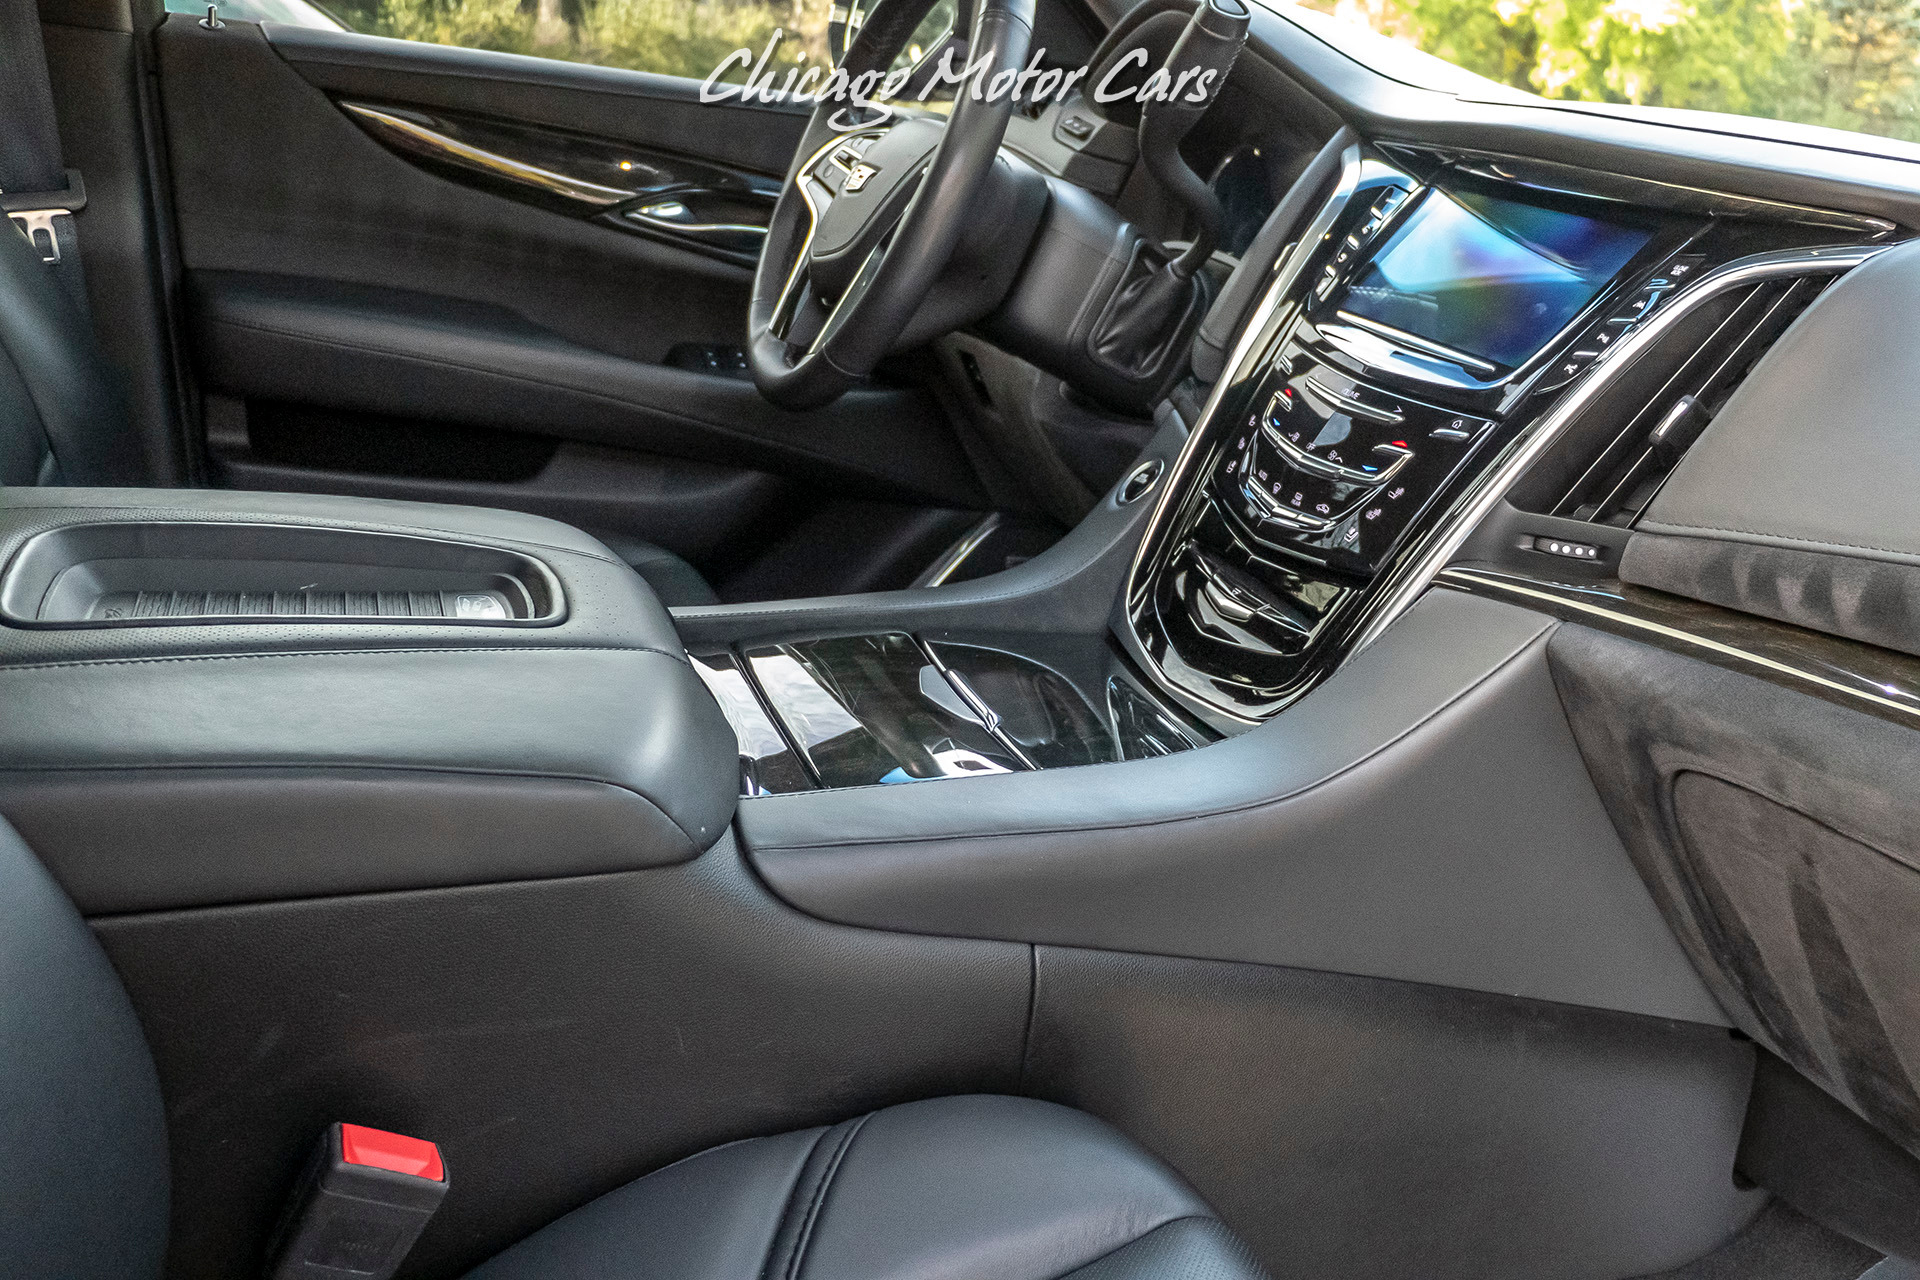 Used-2018-Cadillac-Escalade-ESV-4WD-Platinum-SUV-MSRP-102K-LOADED-REAR-SEAT-ENTERTAINMENT